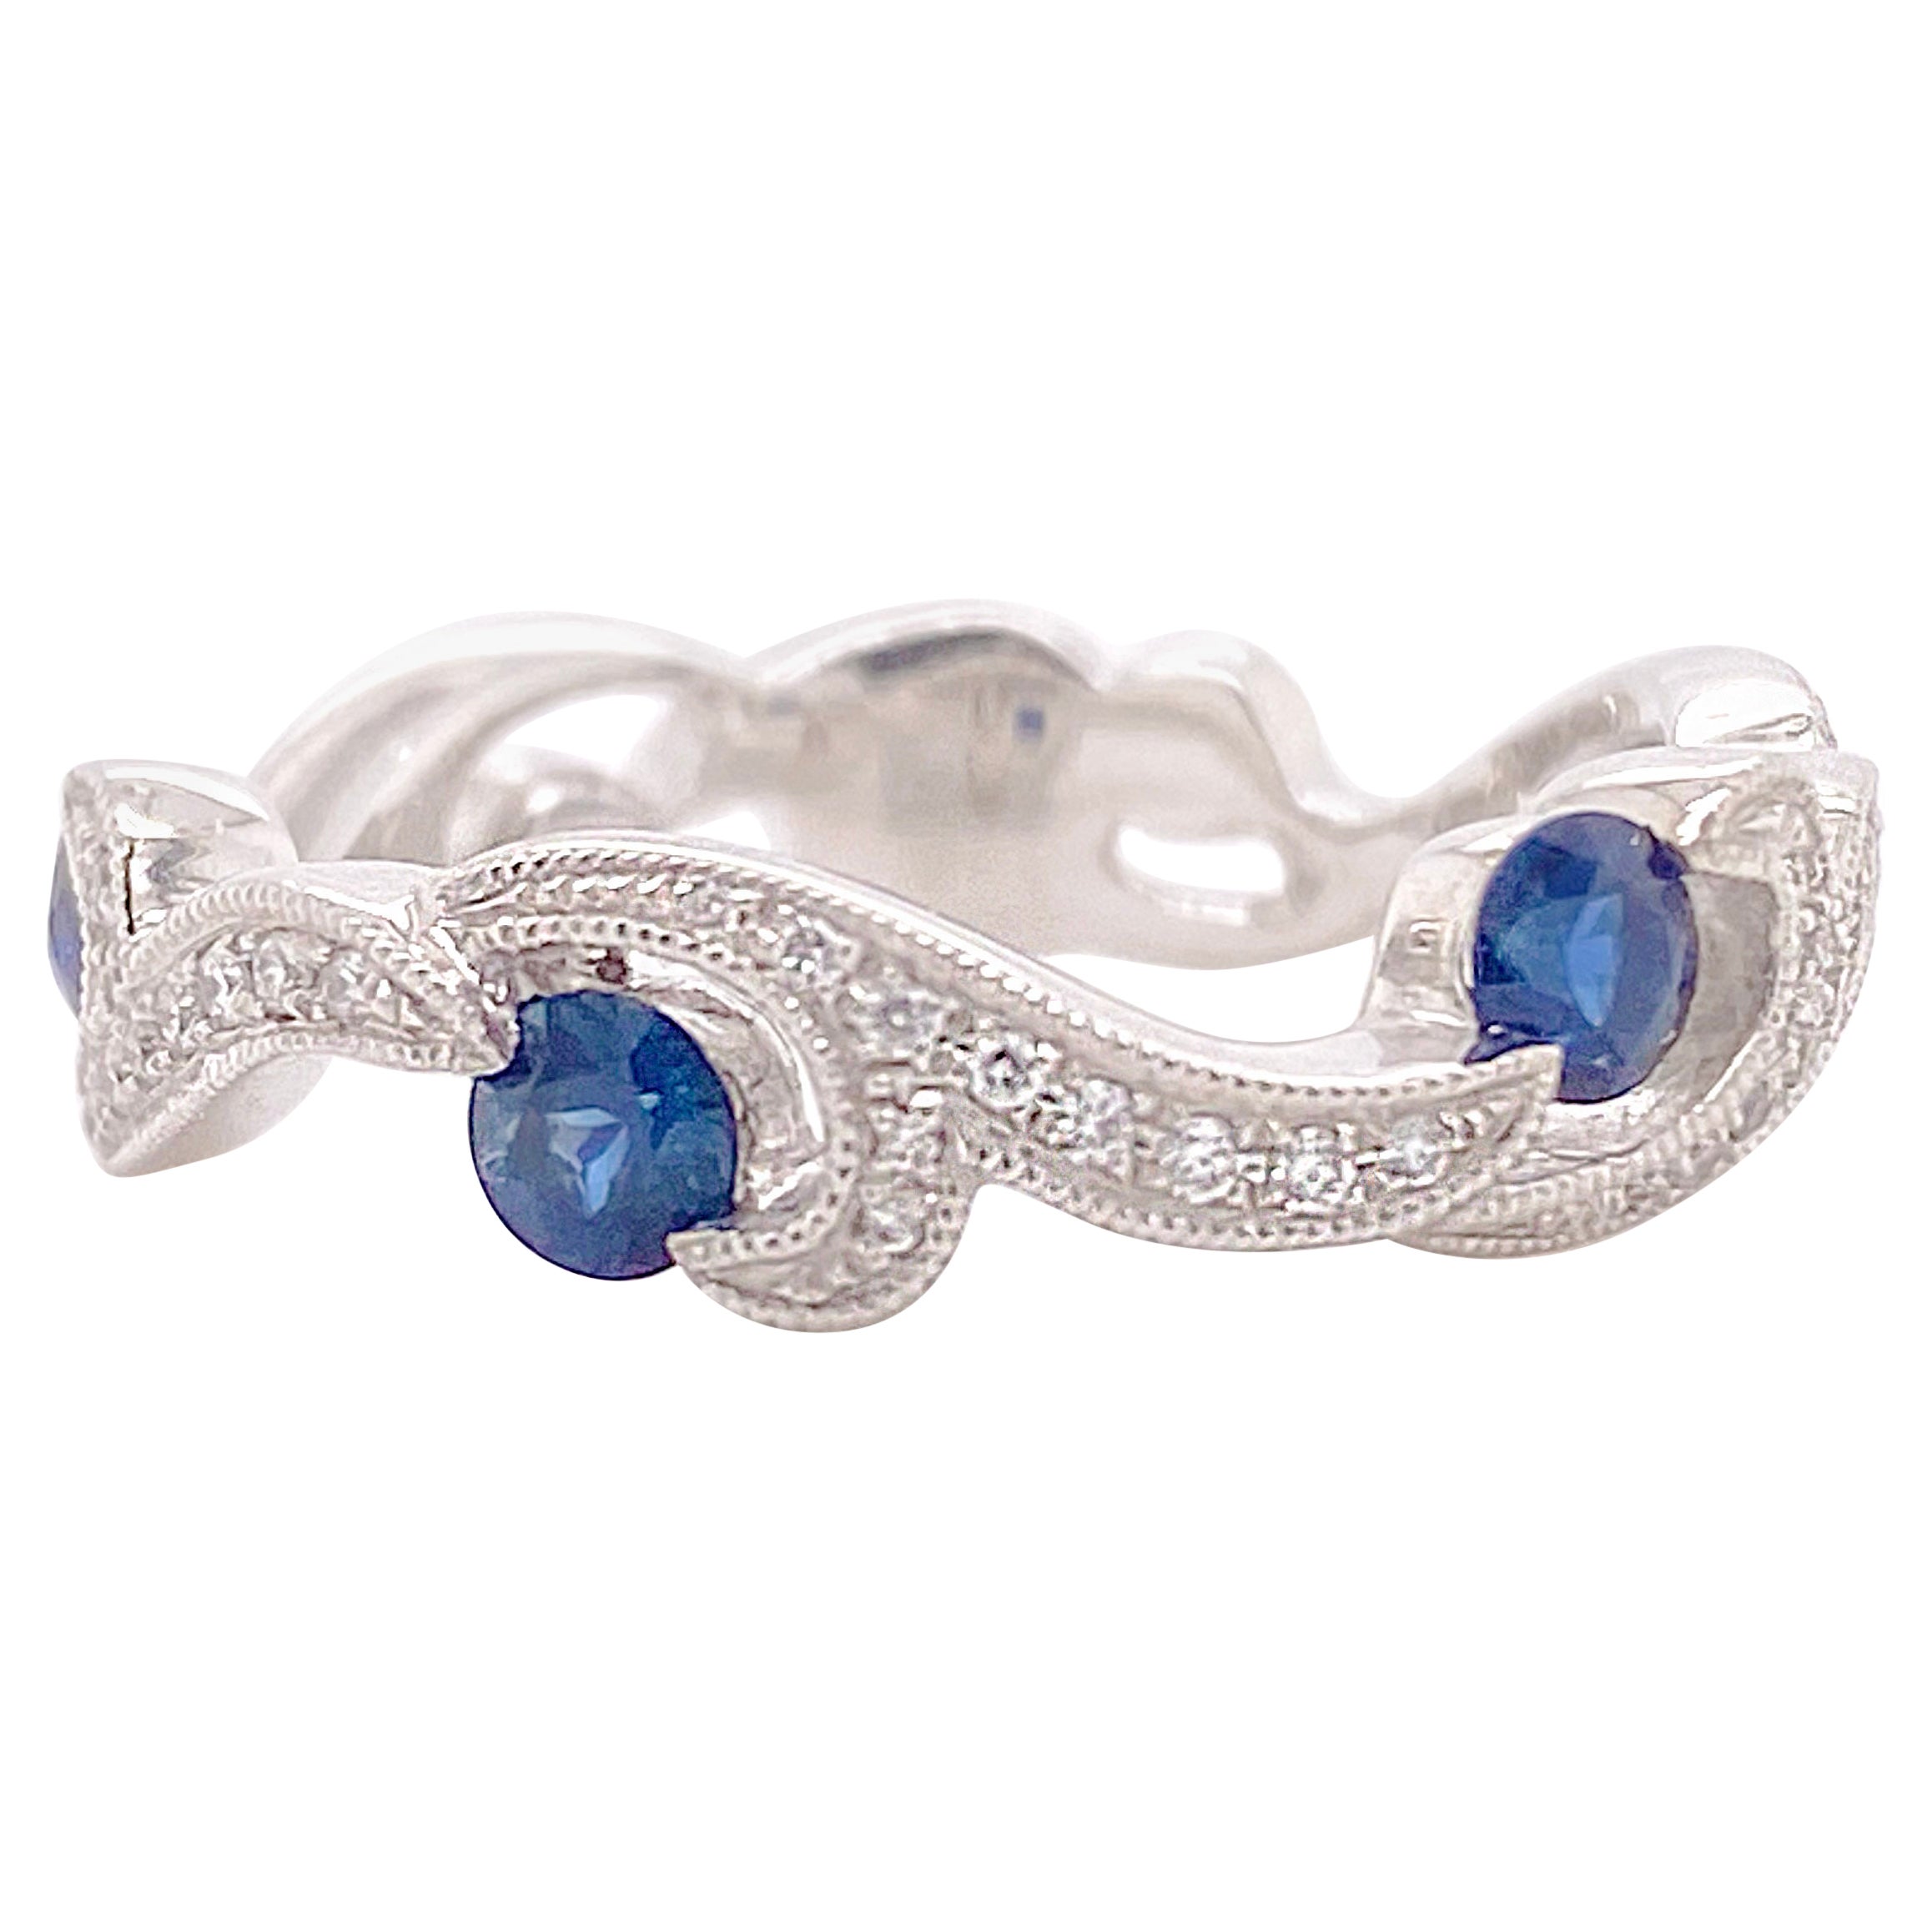 Diamond Sapphire Band, White Gold Wedding Ring, Swirled Design, 3/4 Eternity